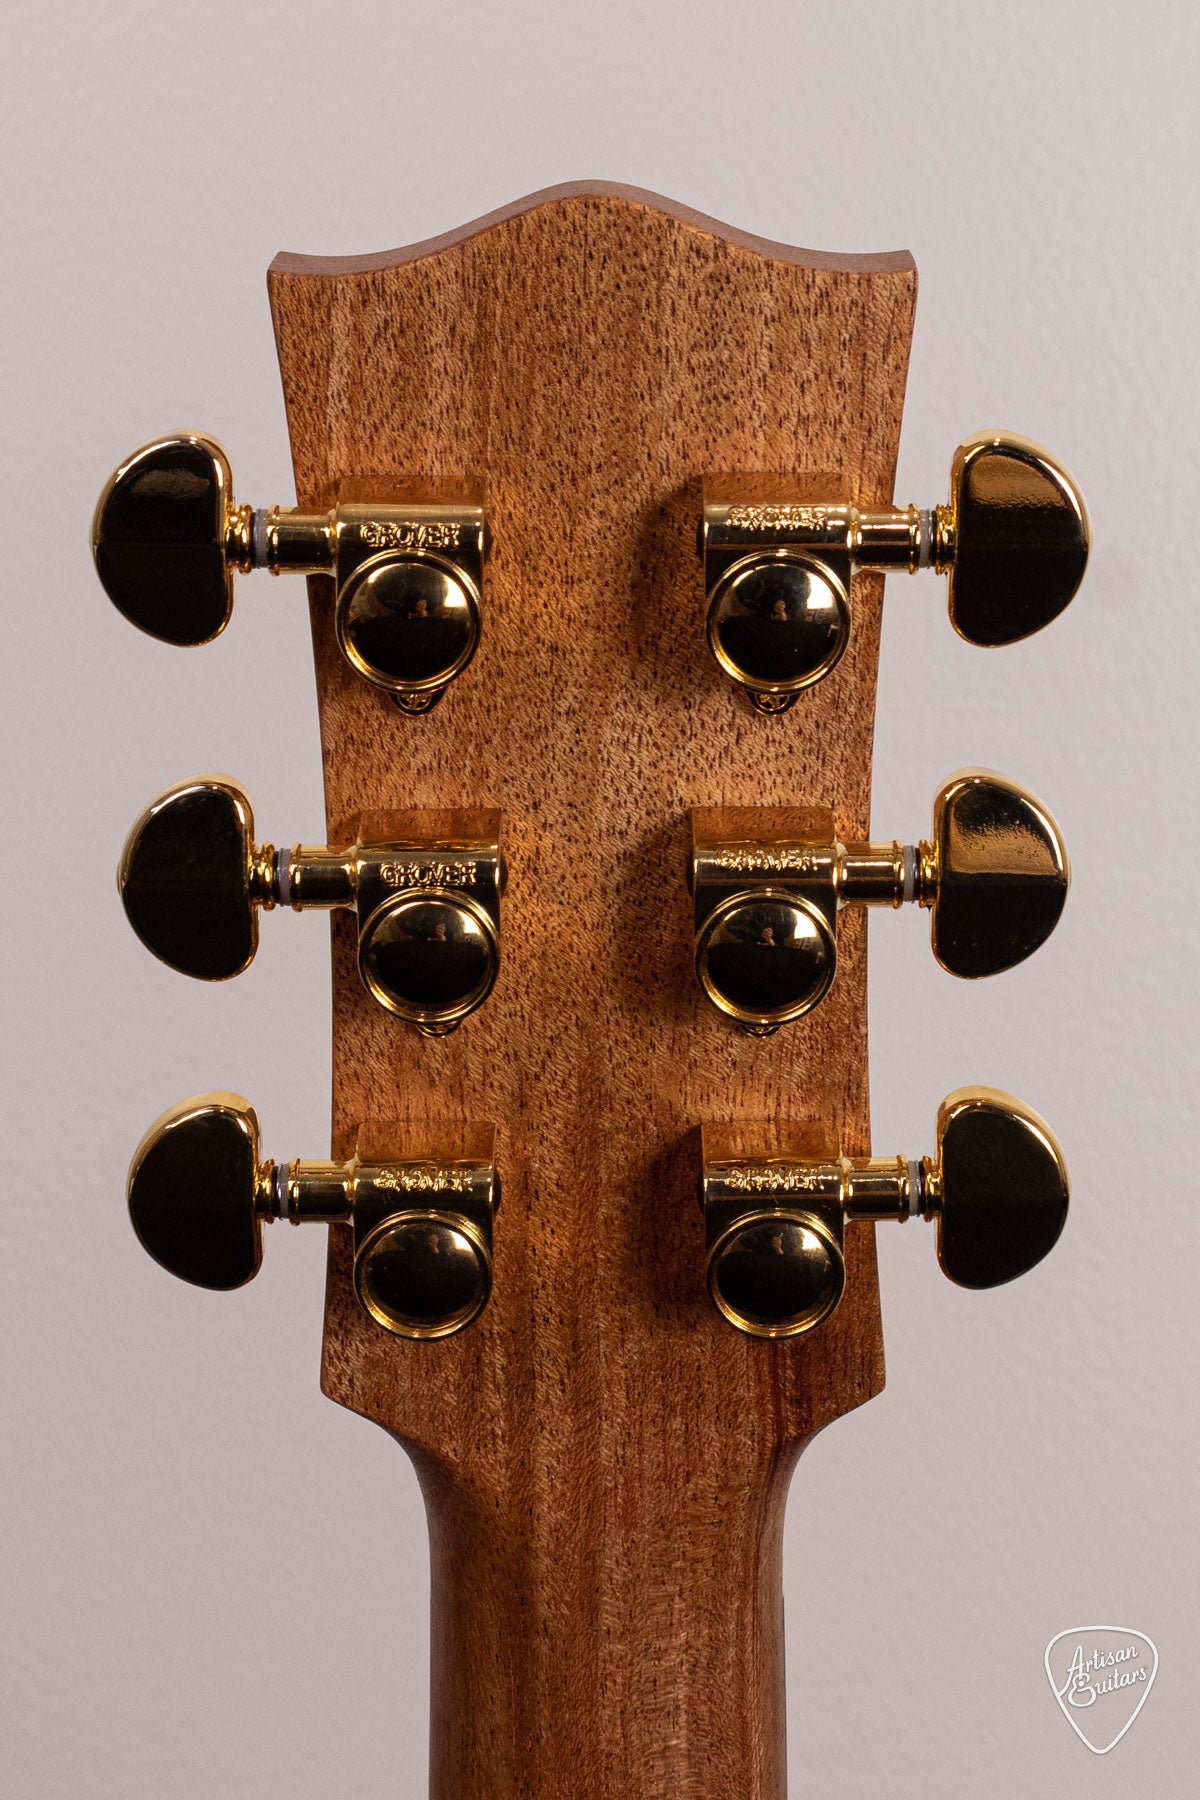 Maton Guitars ER90 Traditional - 16700